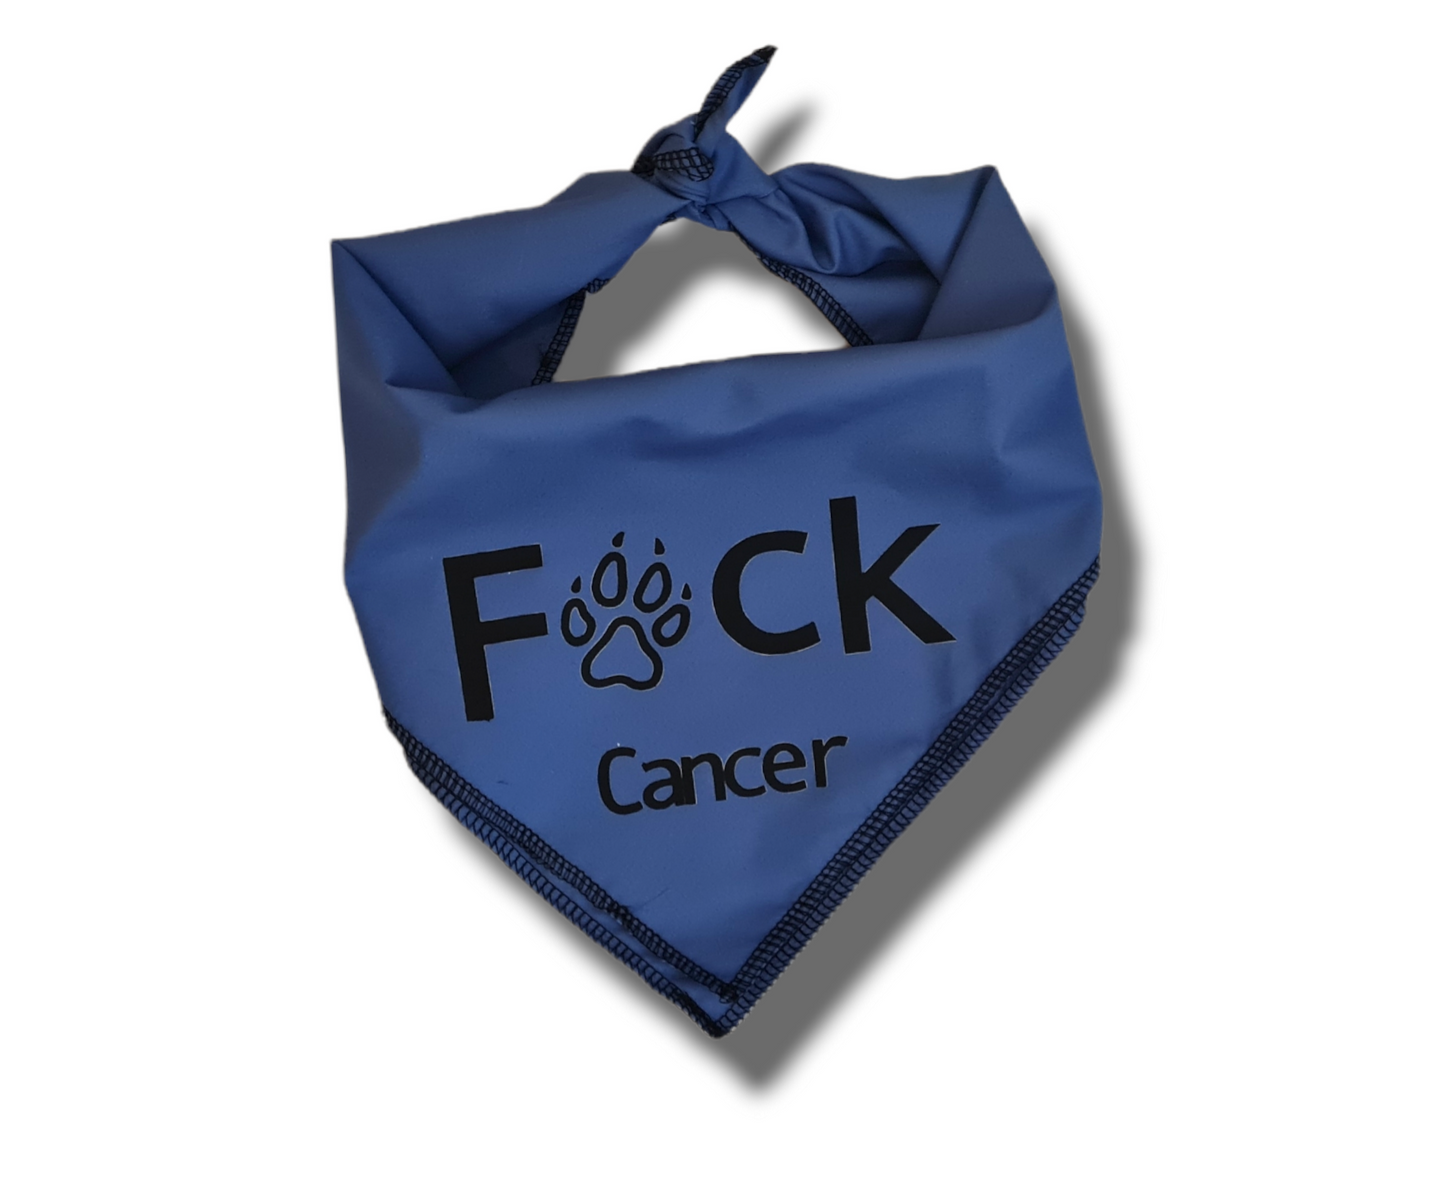 Charity F*ck Cancer tie on dog bandana